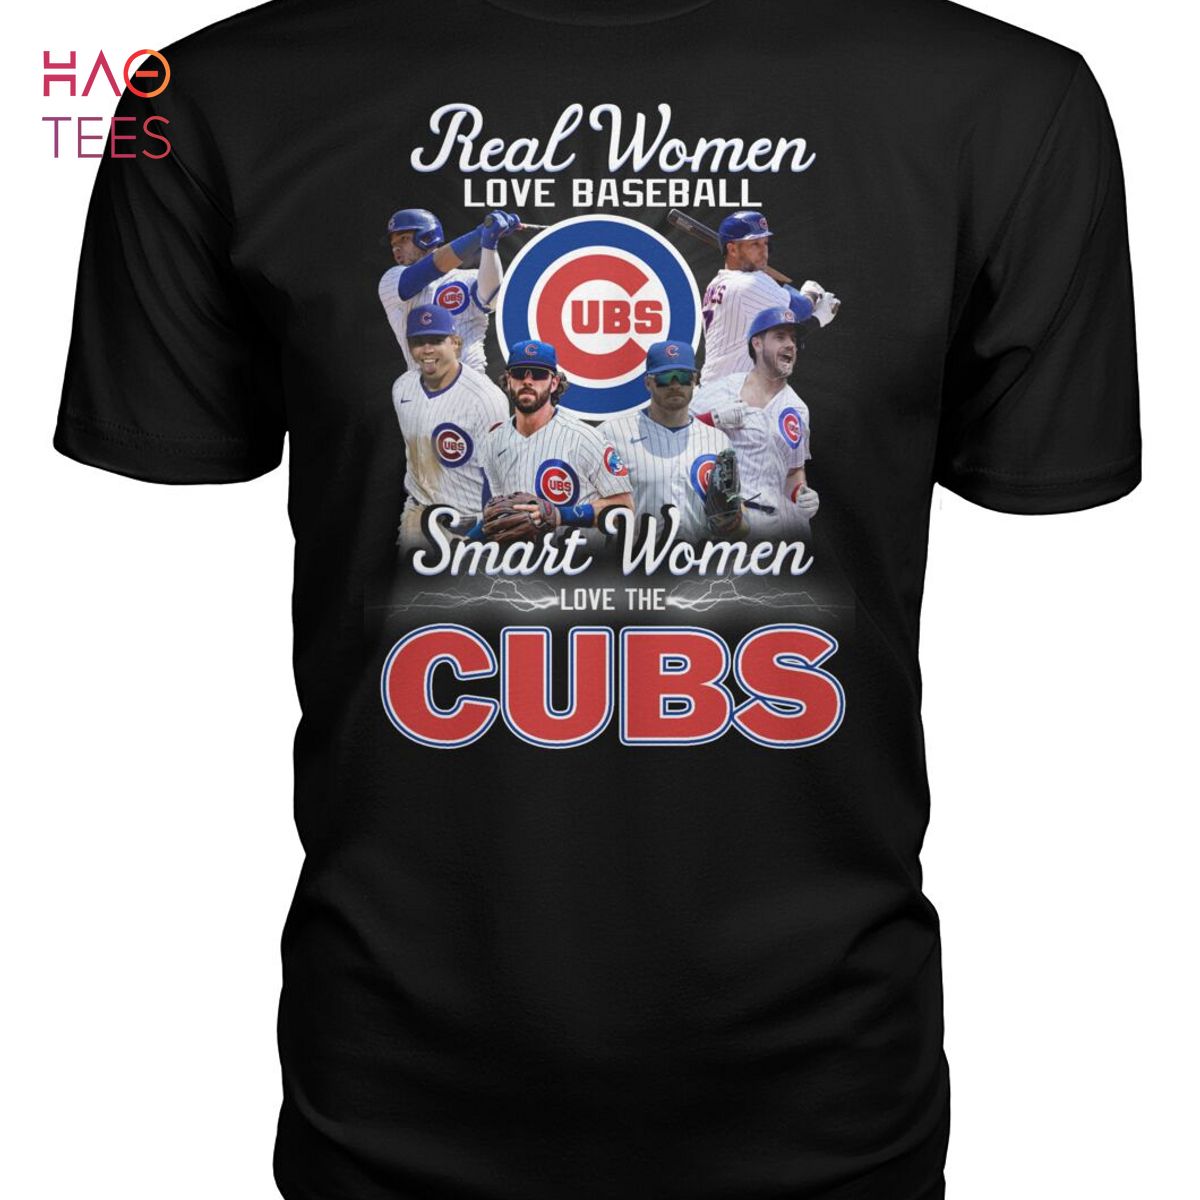 Genuine Merchandise, Shirts, Chicago Cubs Jersey